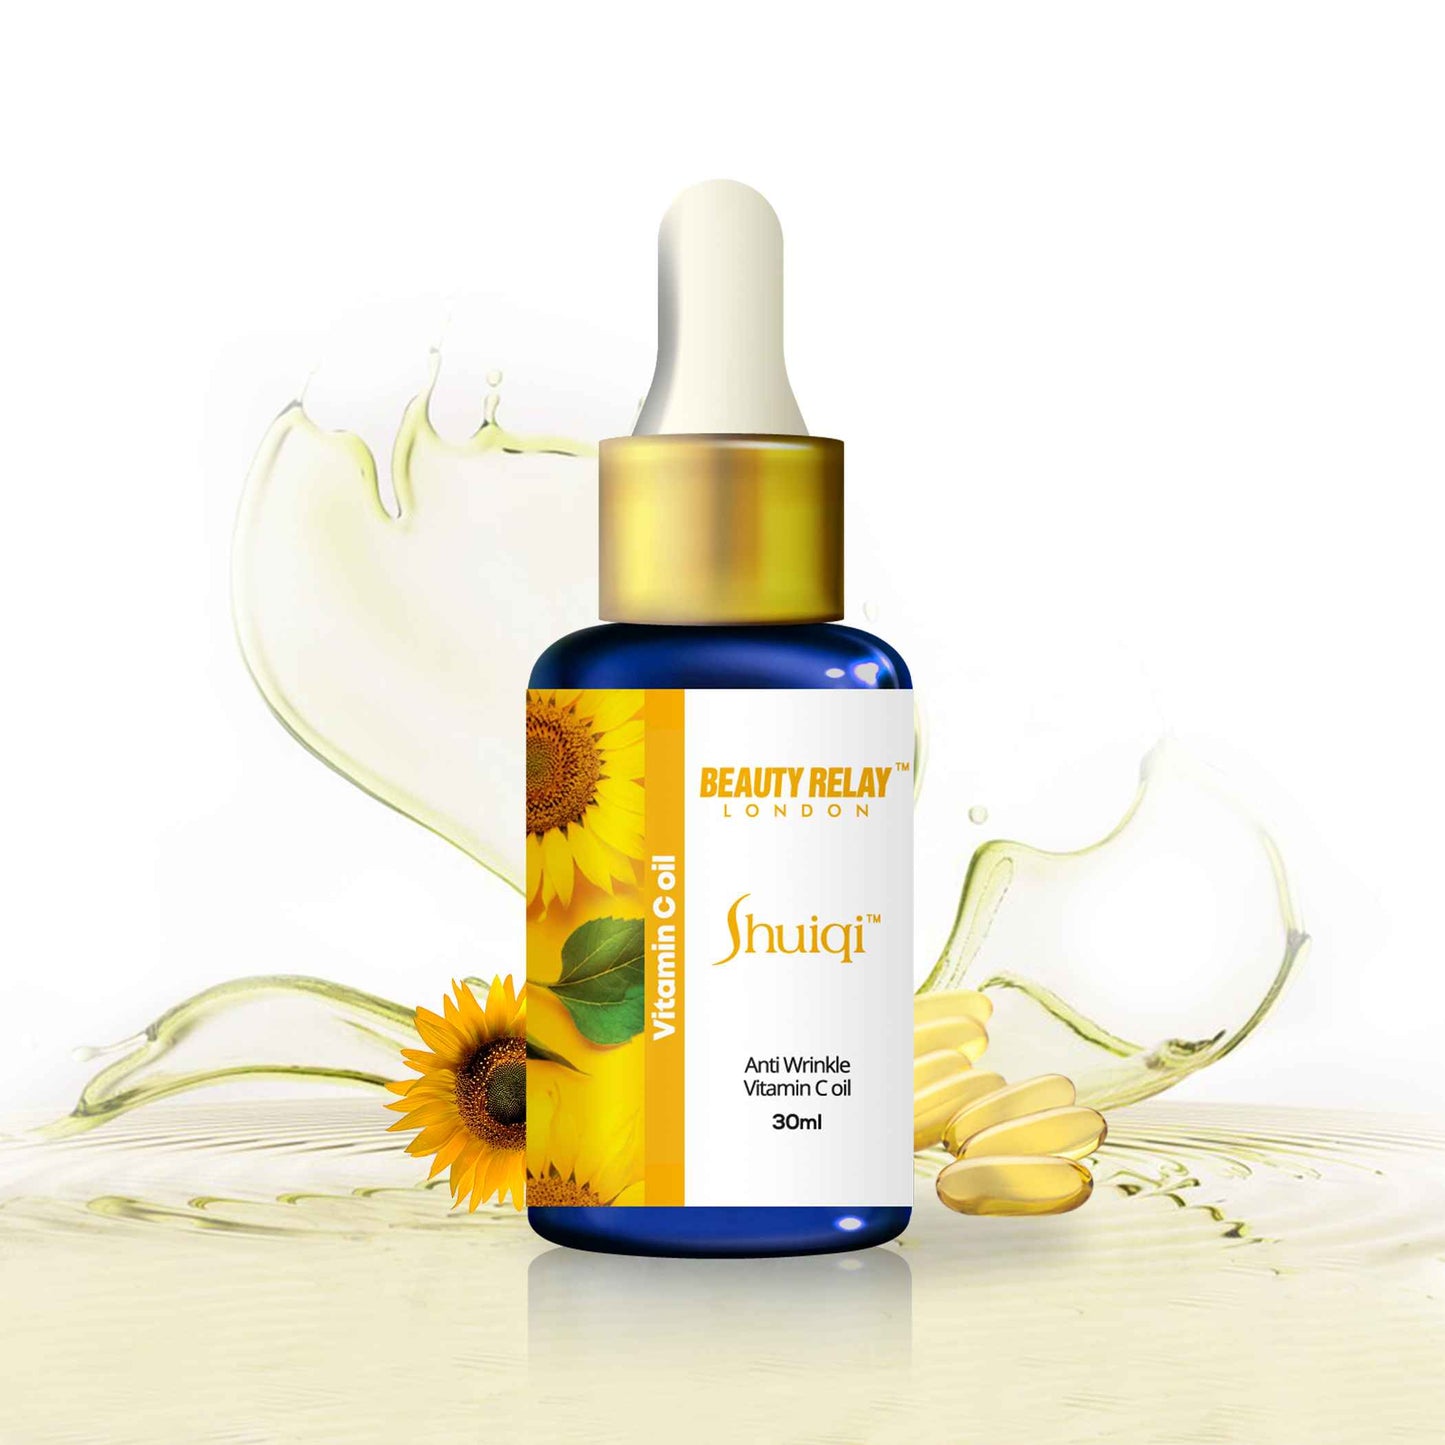 Shuiqi Anti Wrinkle Vitamin C Oil With Sun Flower Oil, Vitamin-E And Amla